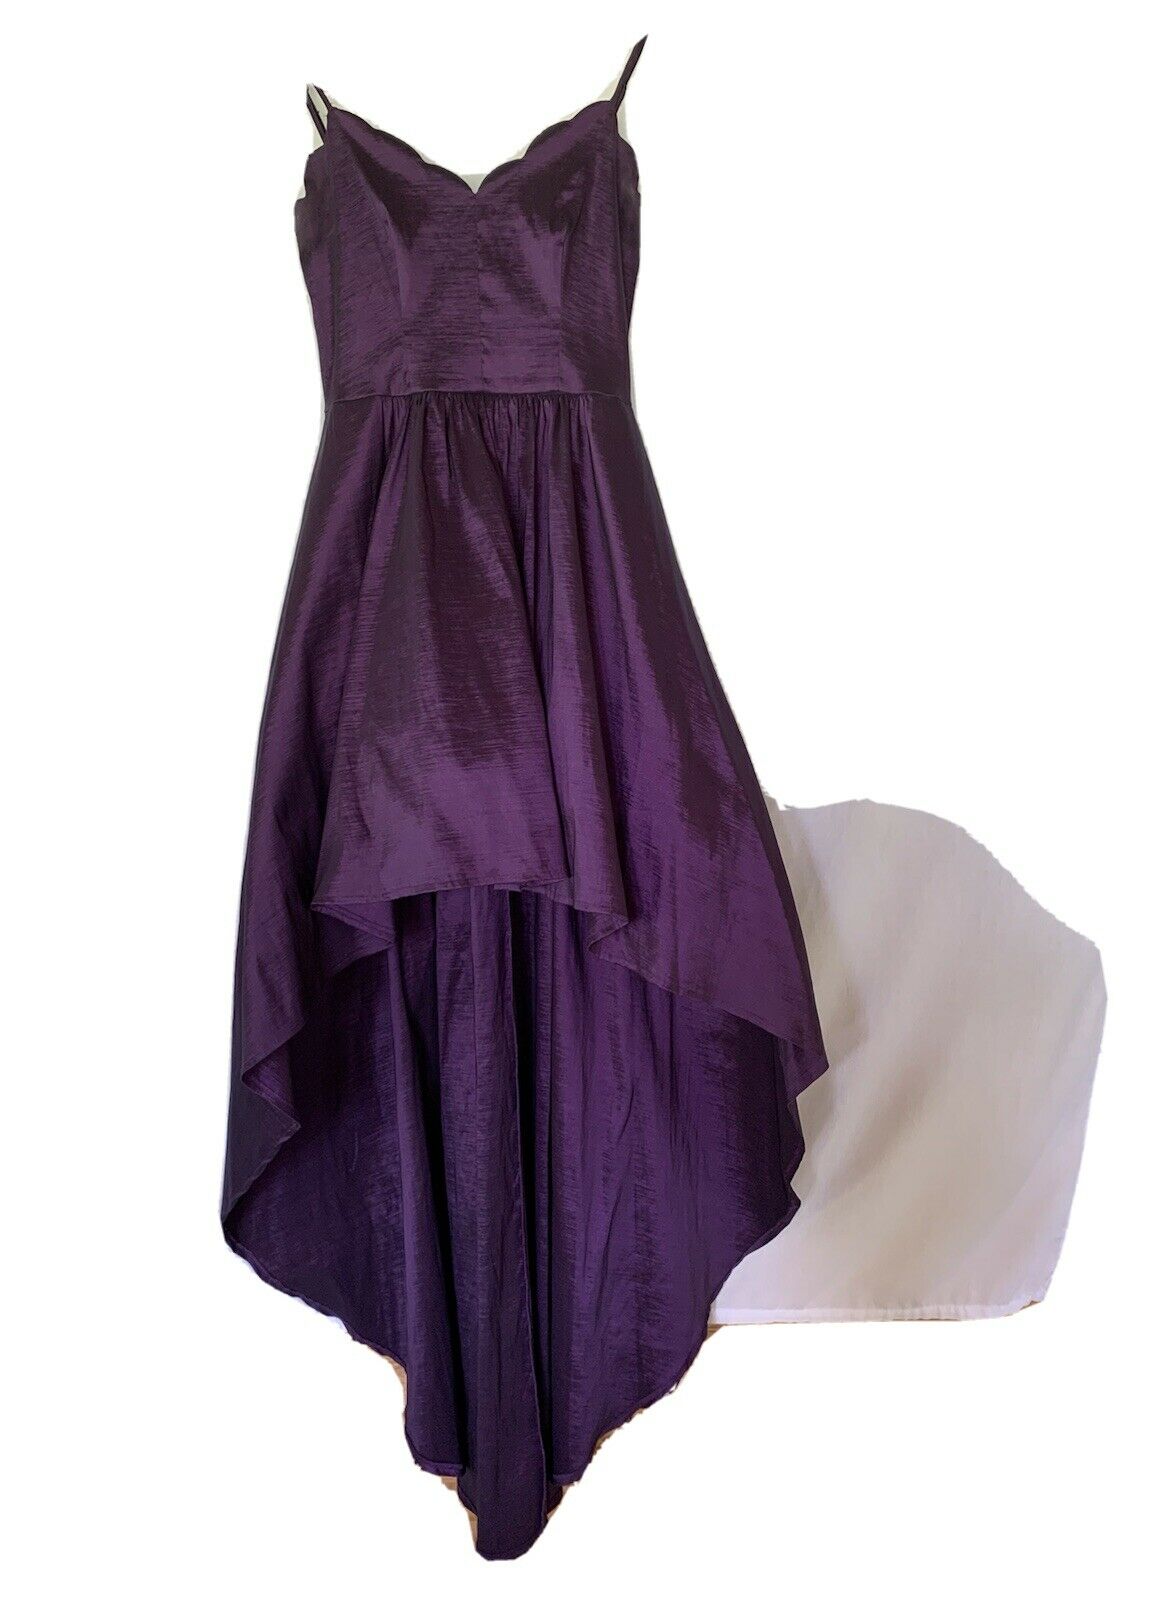 B. Darlin  Junior High-low Formal Dress  Sz 7/8 Color Purple